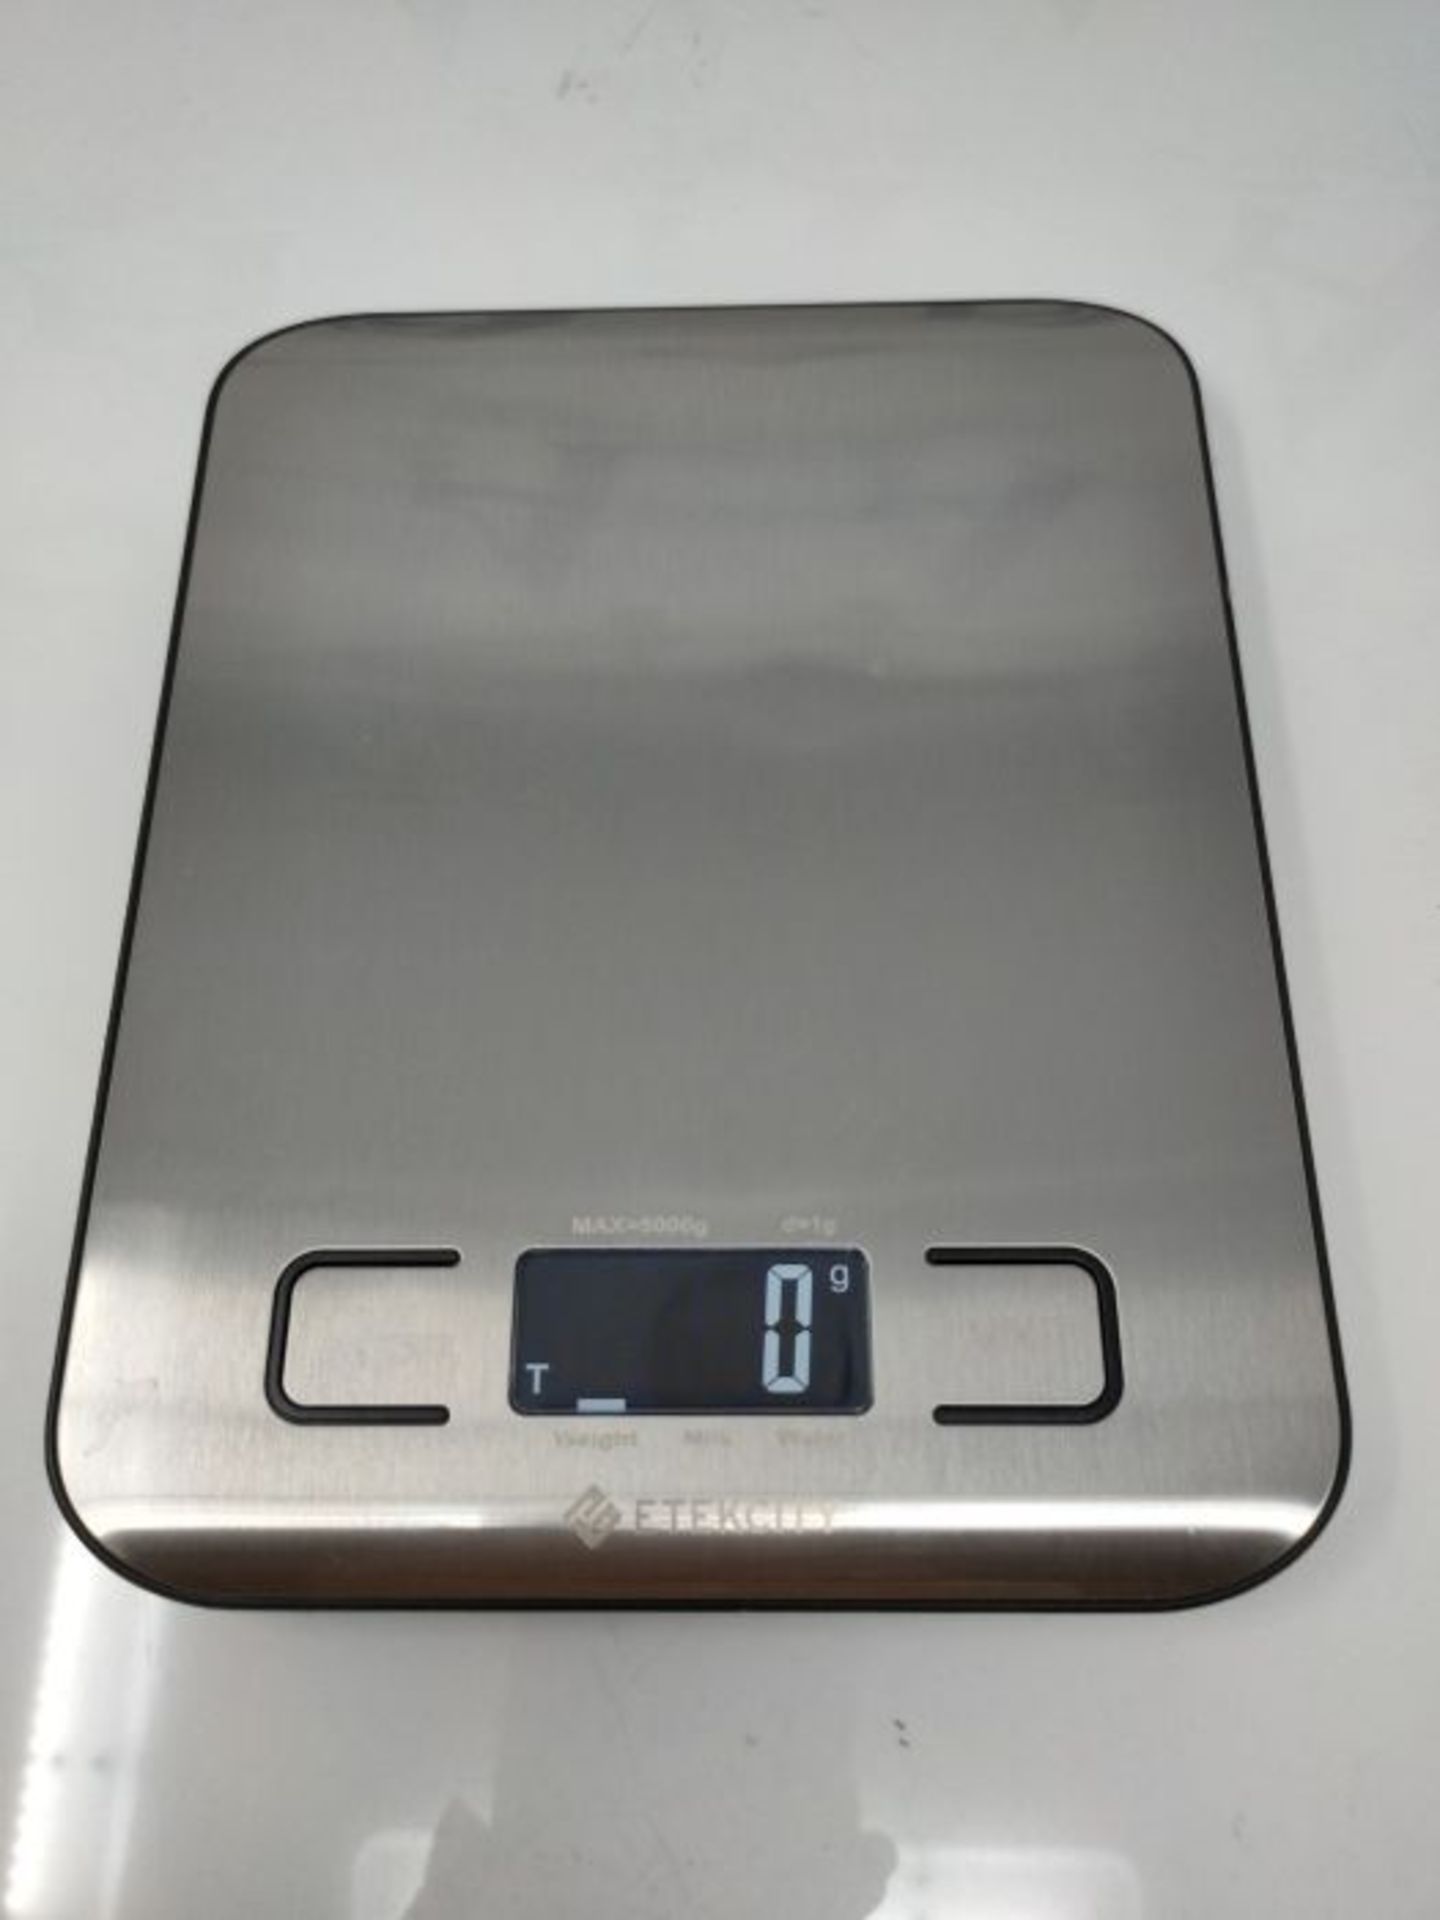 Etekcity Digital Kitchen Scales, Premium Stainless Steel Food Scales, Professional Foo - Image 2 of 3